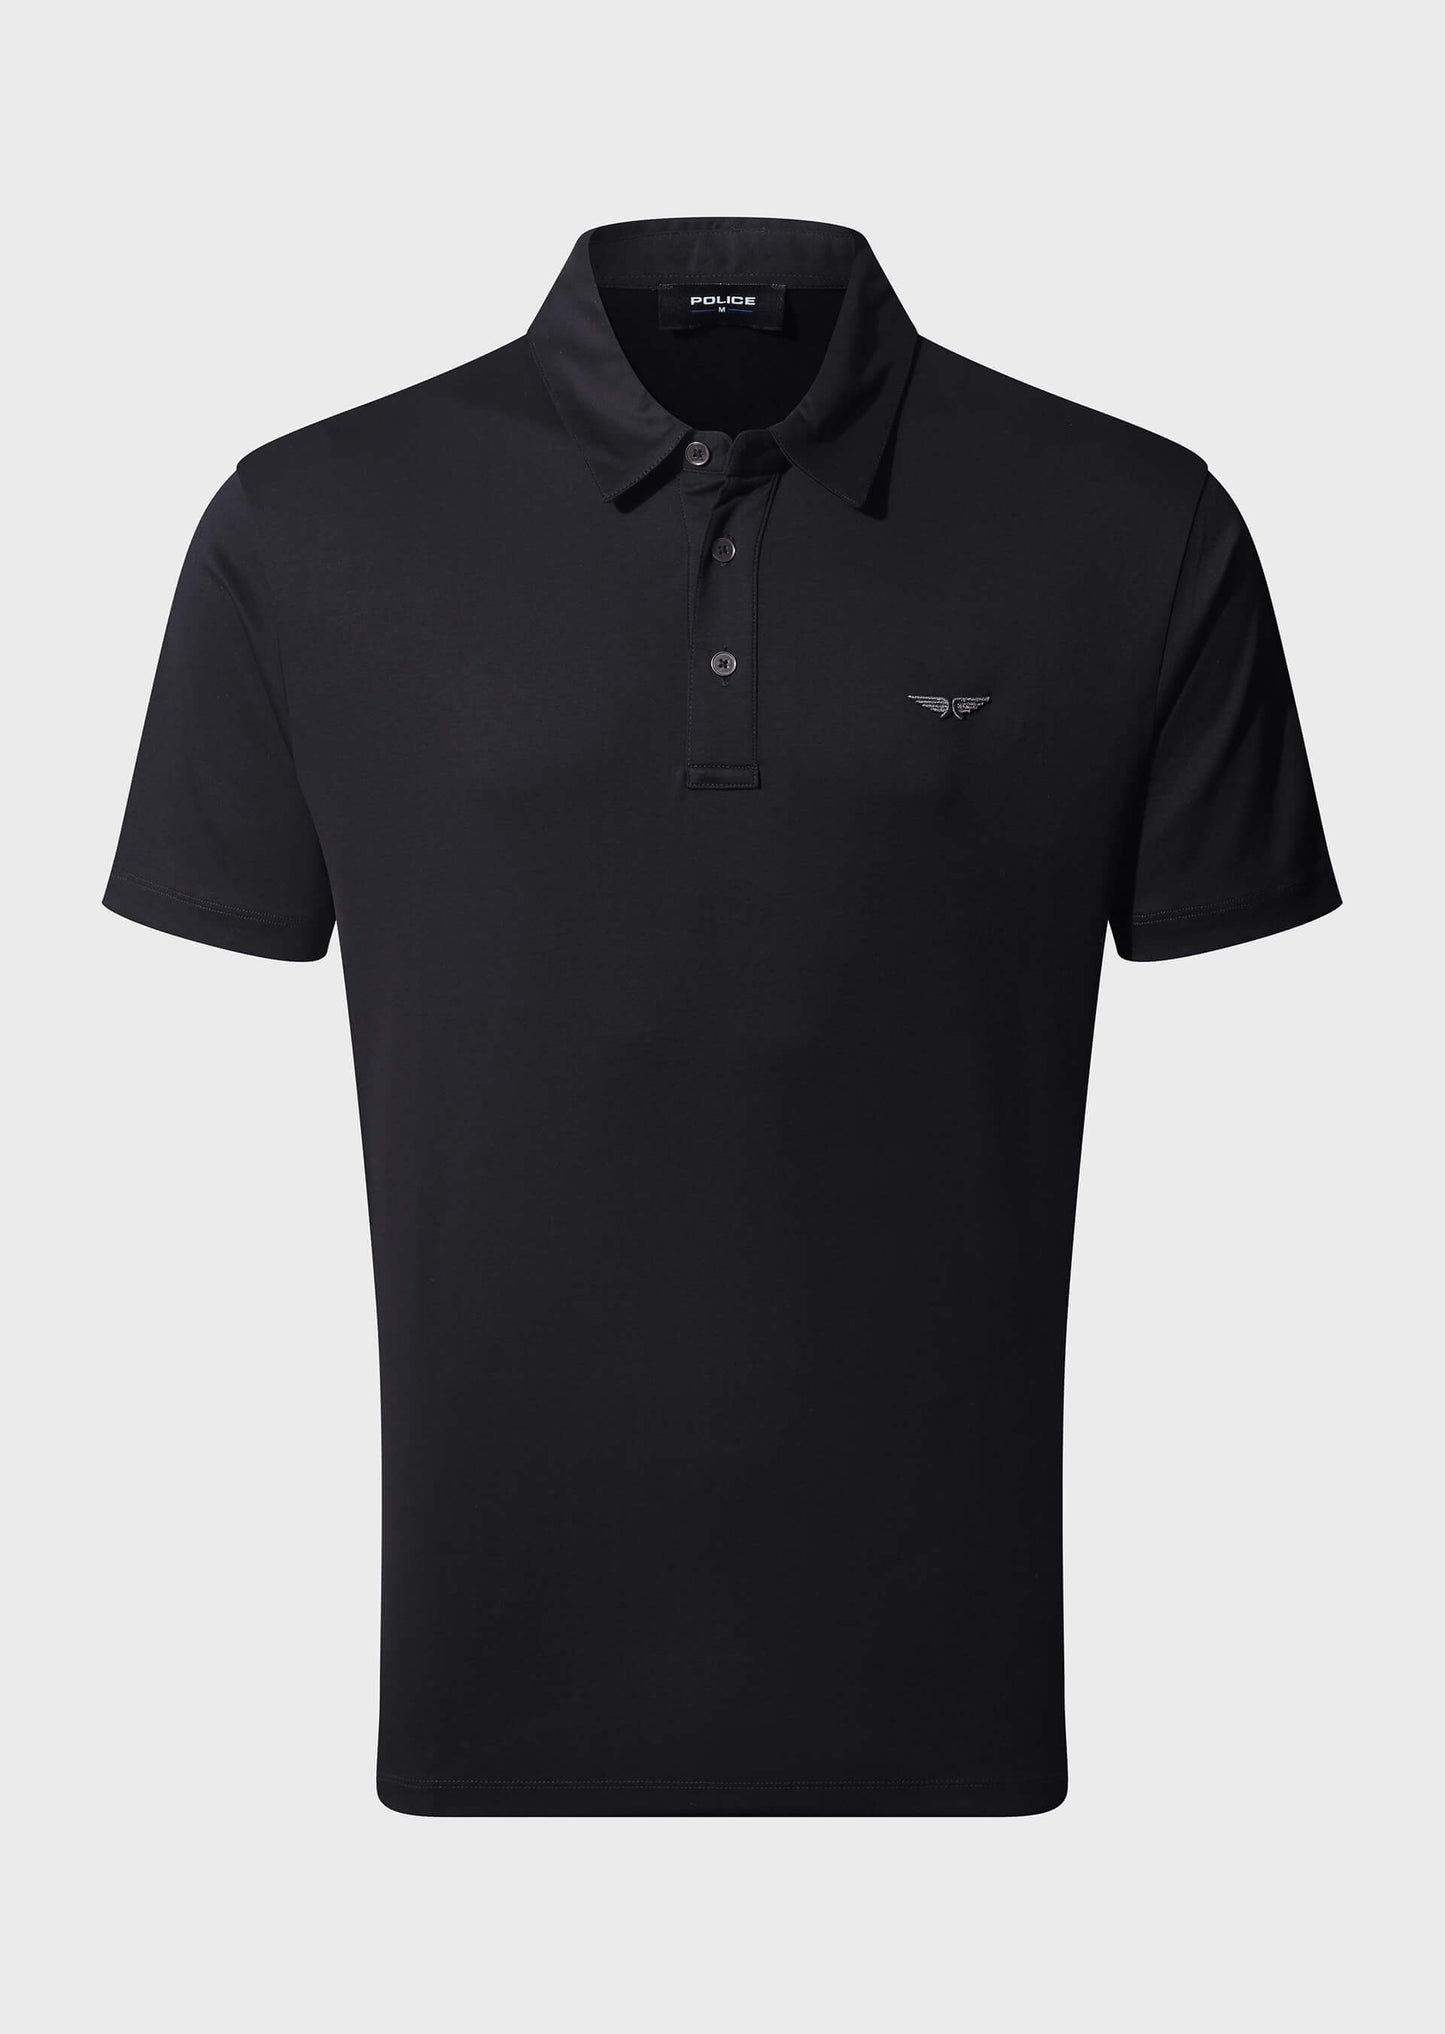 Leytun Black Polo Shirt